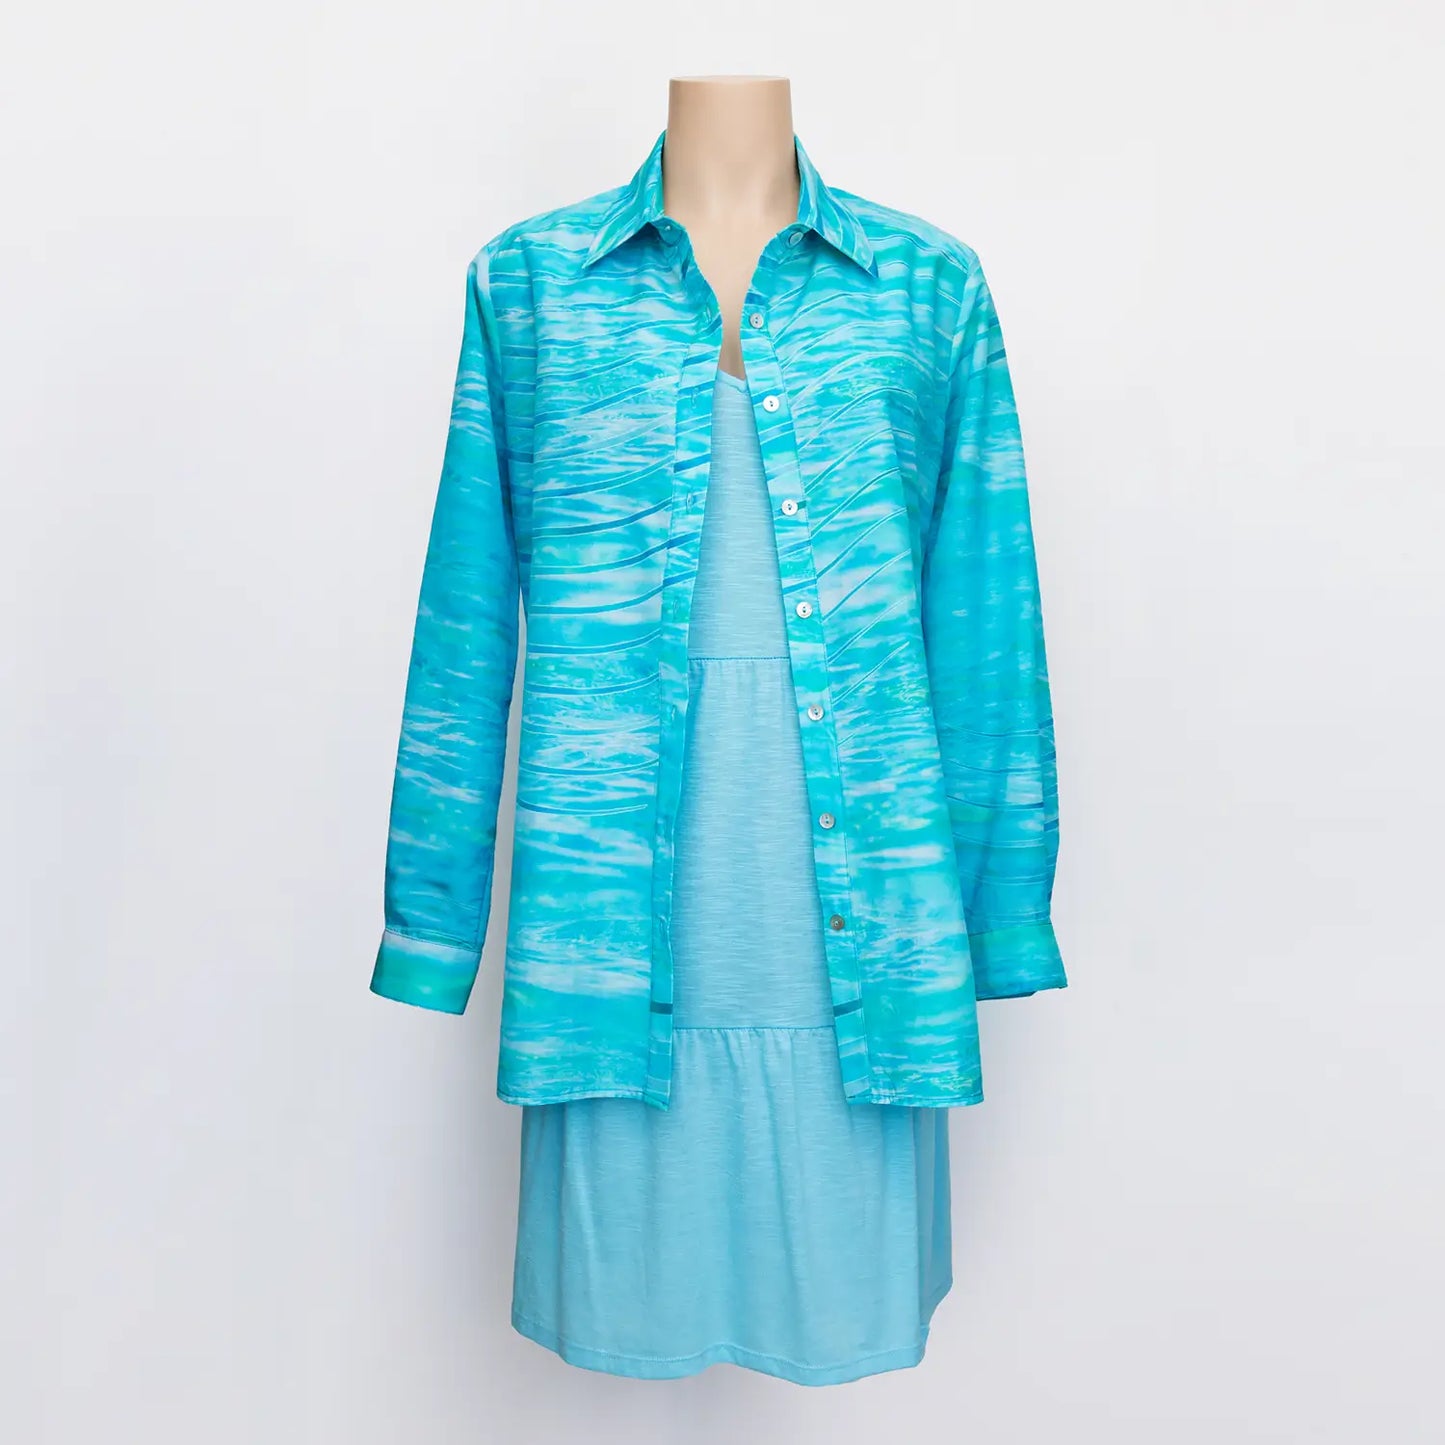 florida long sleeve silk cotton shirt by seahorse silks australia over blue dress